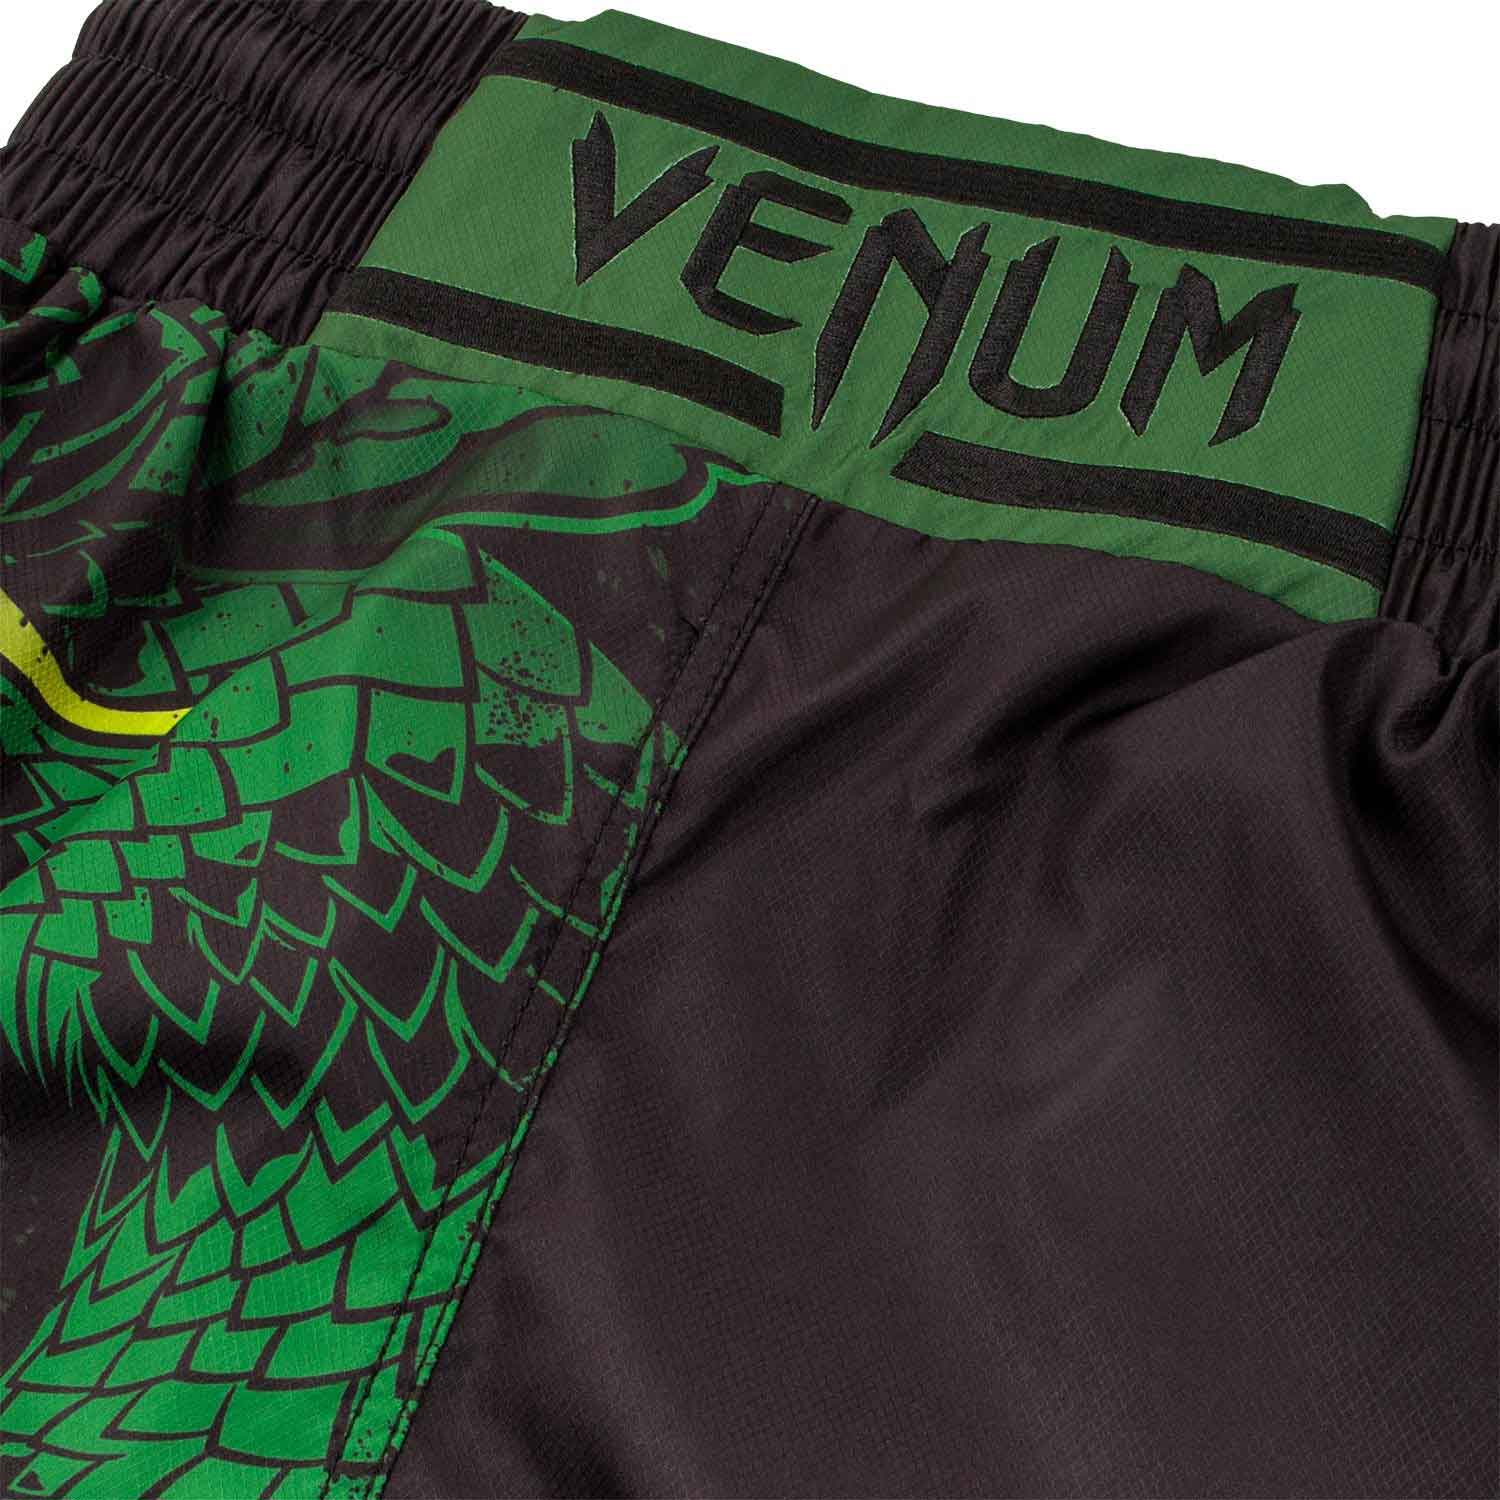 VENUM／ヴェナム　ボクシングショーツ　　GREEN VIPER BOXING SHORTS／グリーン・ヴァイパー ボクシングショーツ